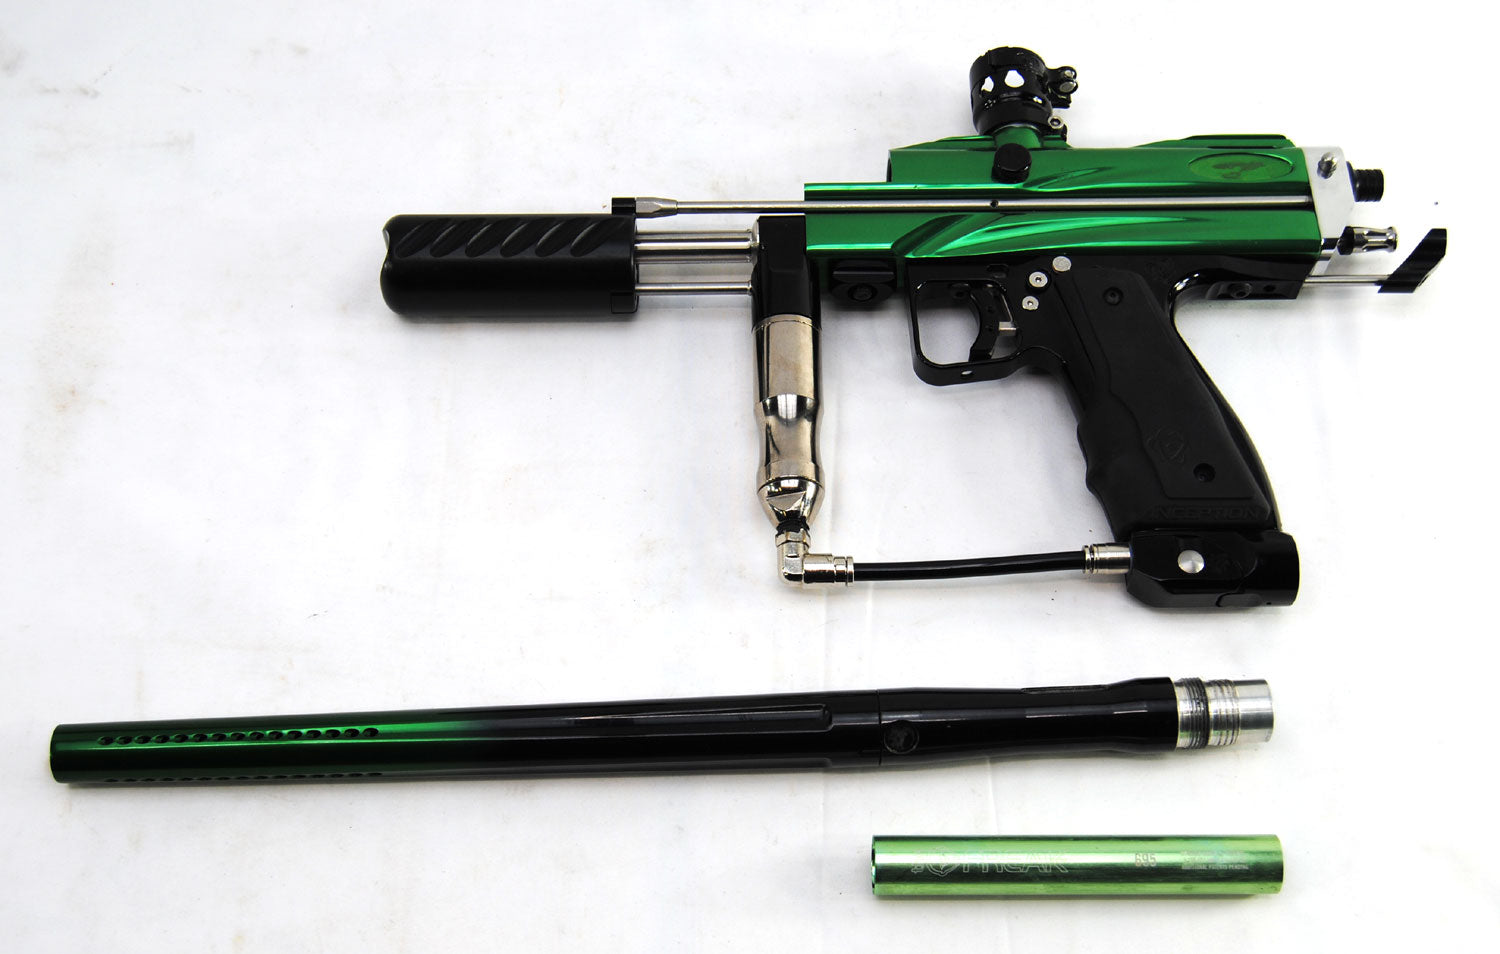 Used WGP Pump Paintball Gun - Green/Black - WGP